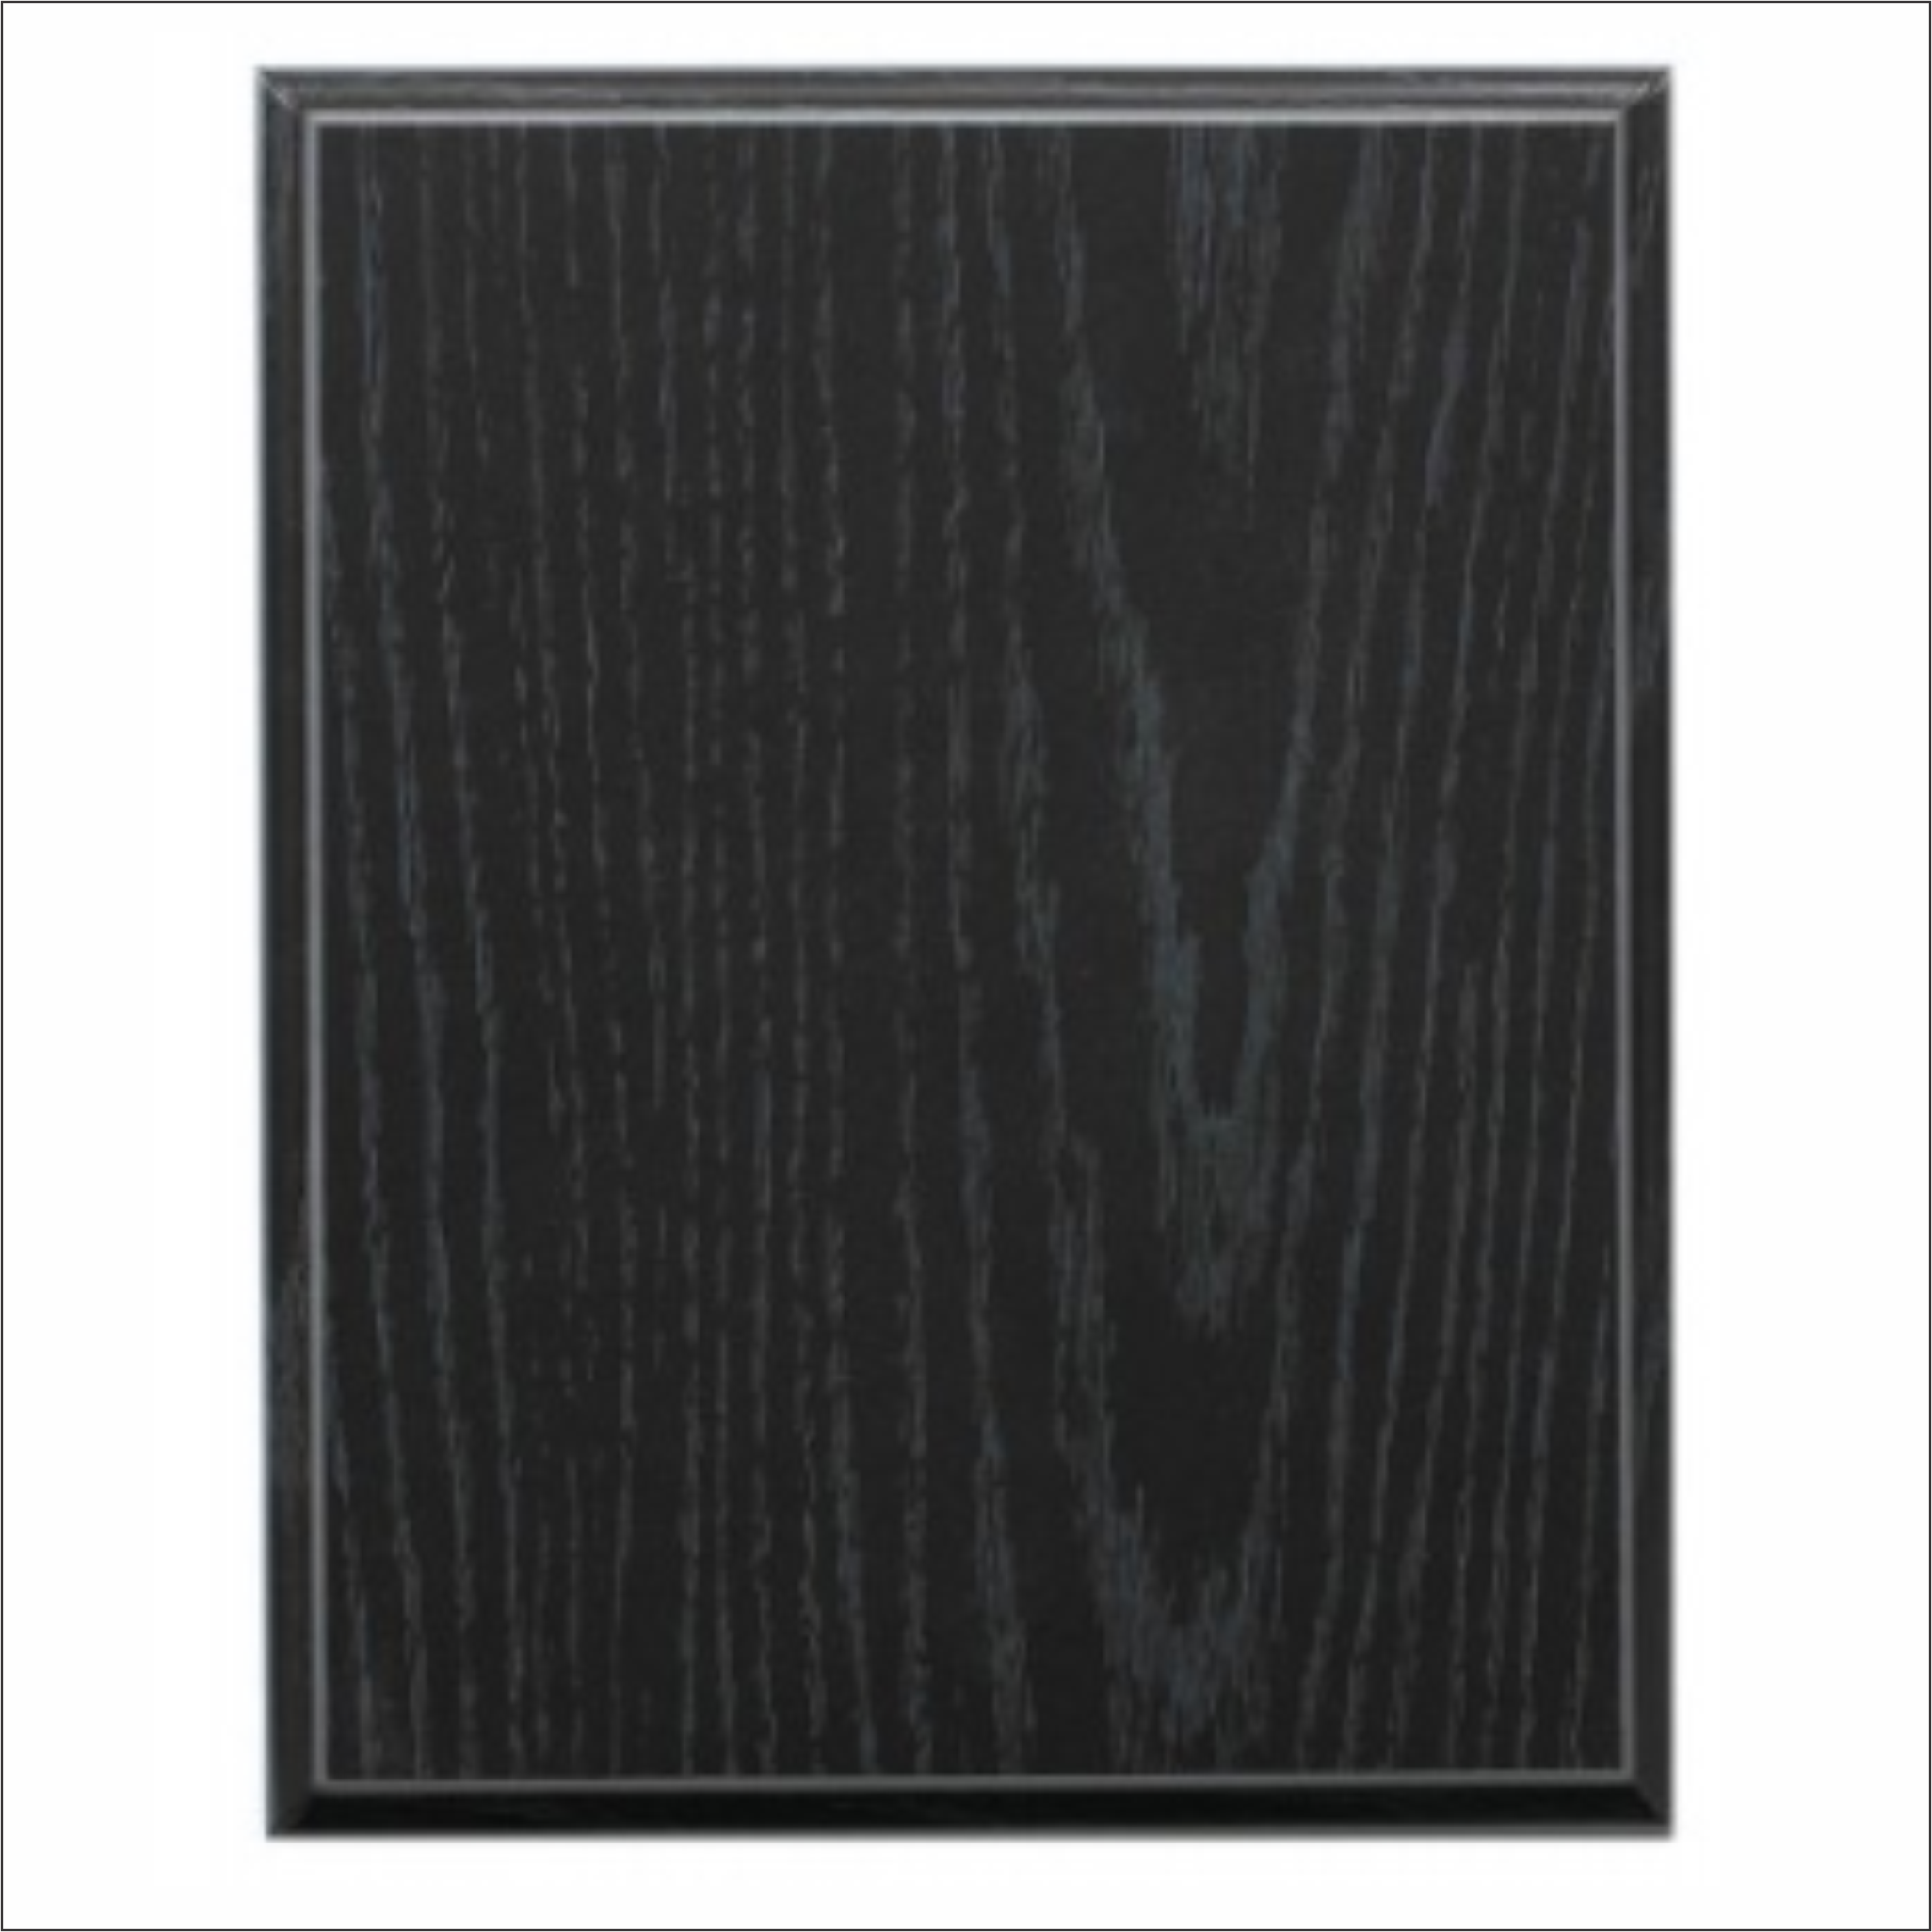 Black Oak plaque - Laser series